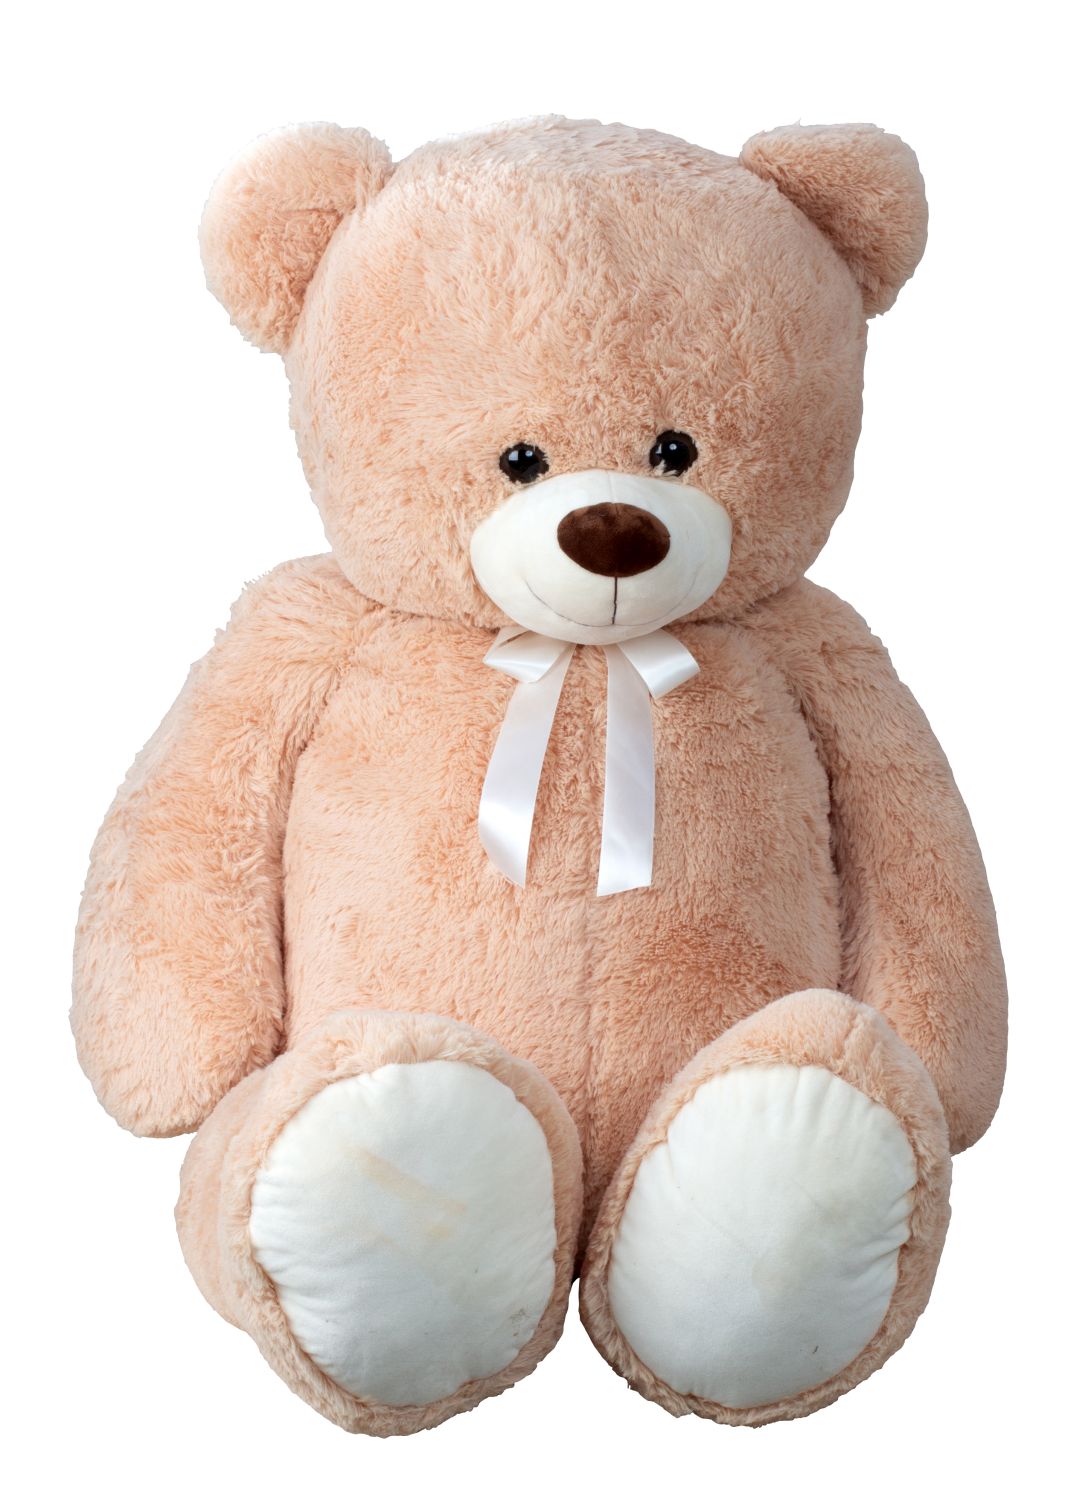 Riesen Teddybär Kuschelbär XXL 150 cm groß Braun Plüschbär Kuscheltier 